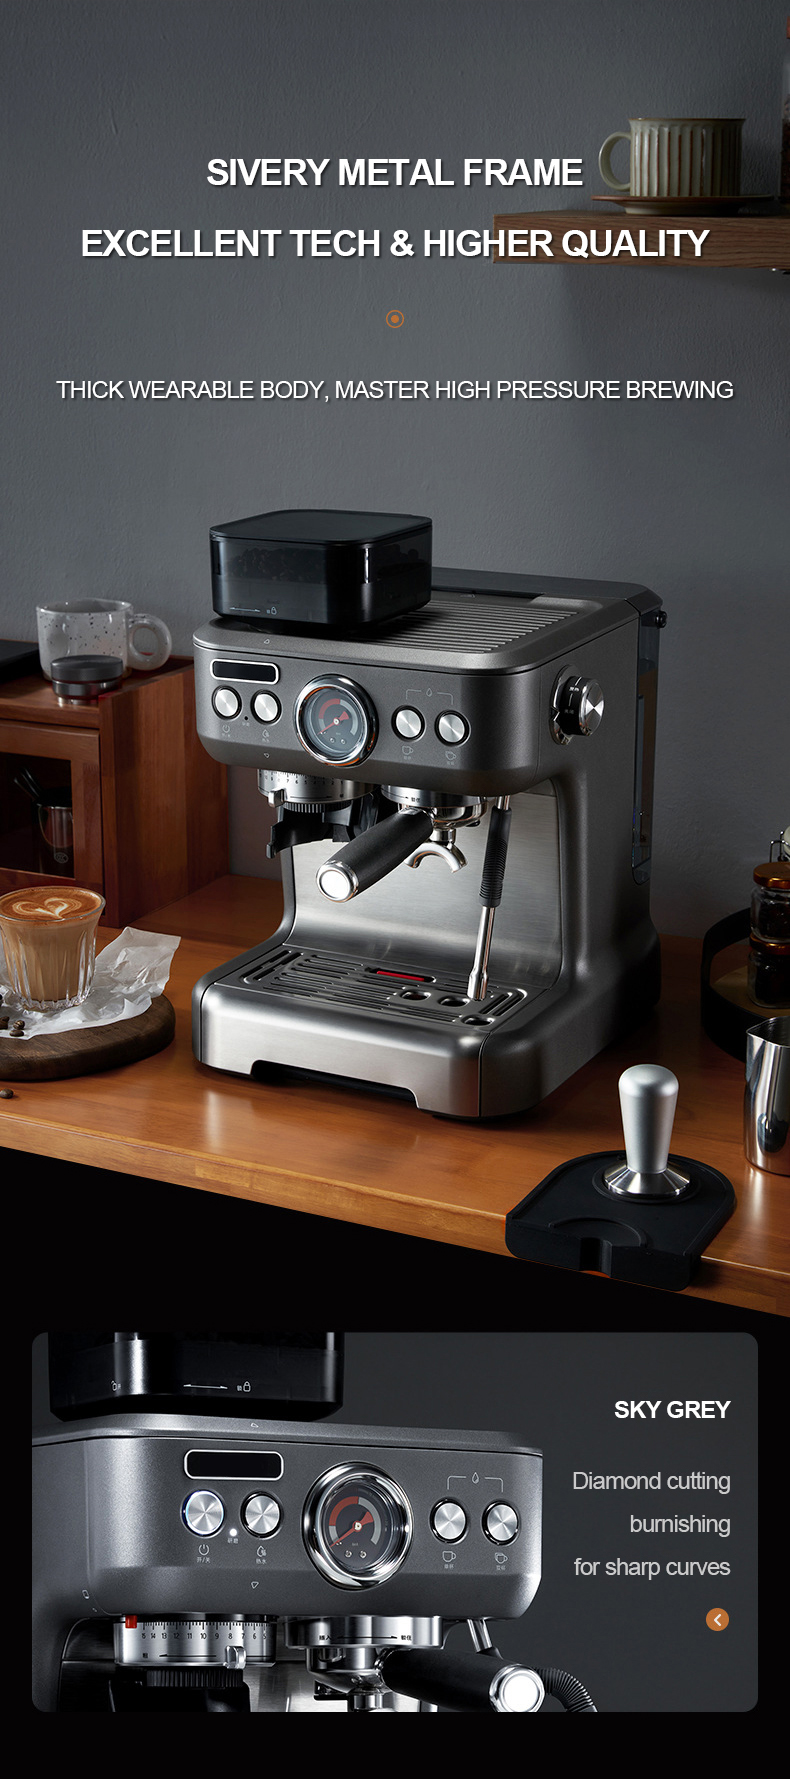 Machine à café professionnel